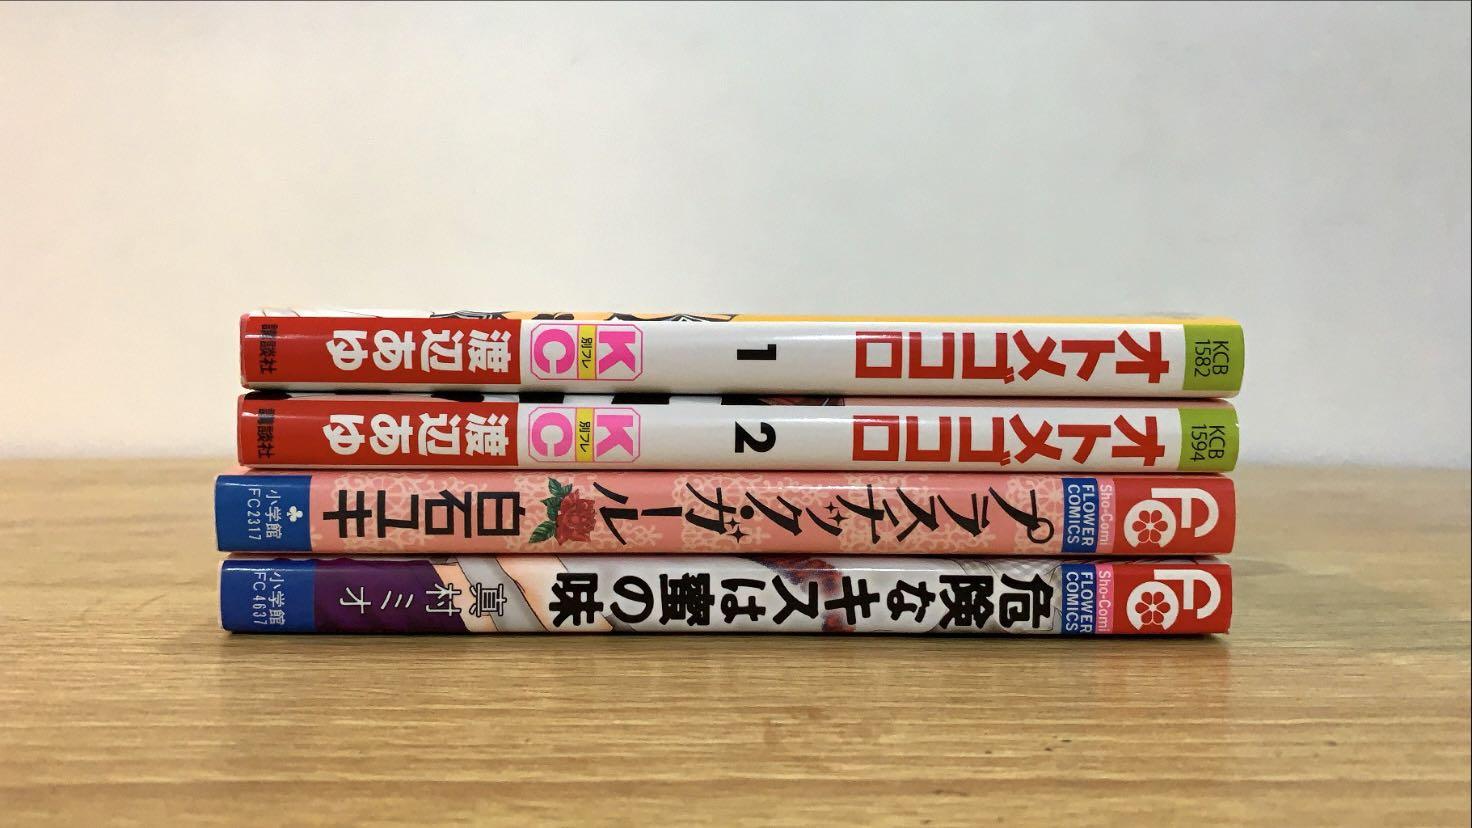 Completed Japanese Manga Shoujo Romance School Life Drama Comedy Books Stationery Comics Manga On Carousell